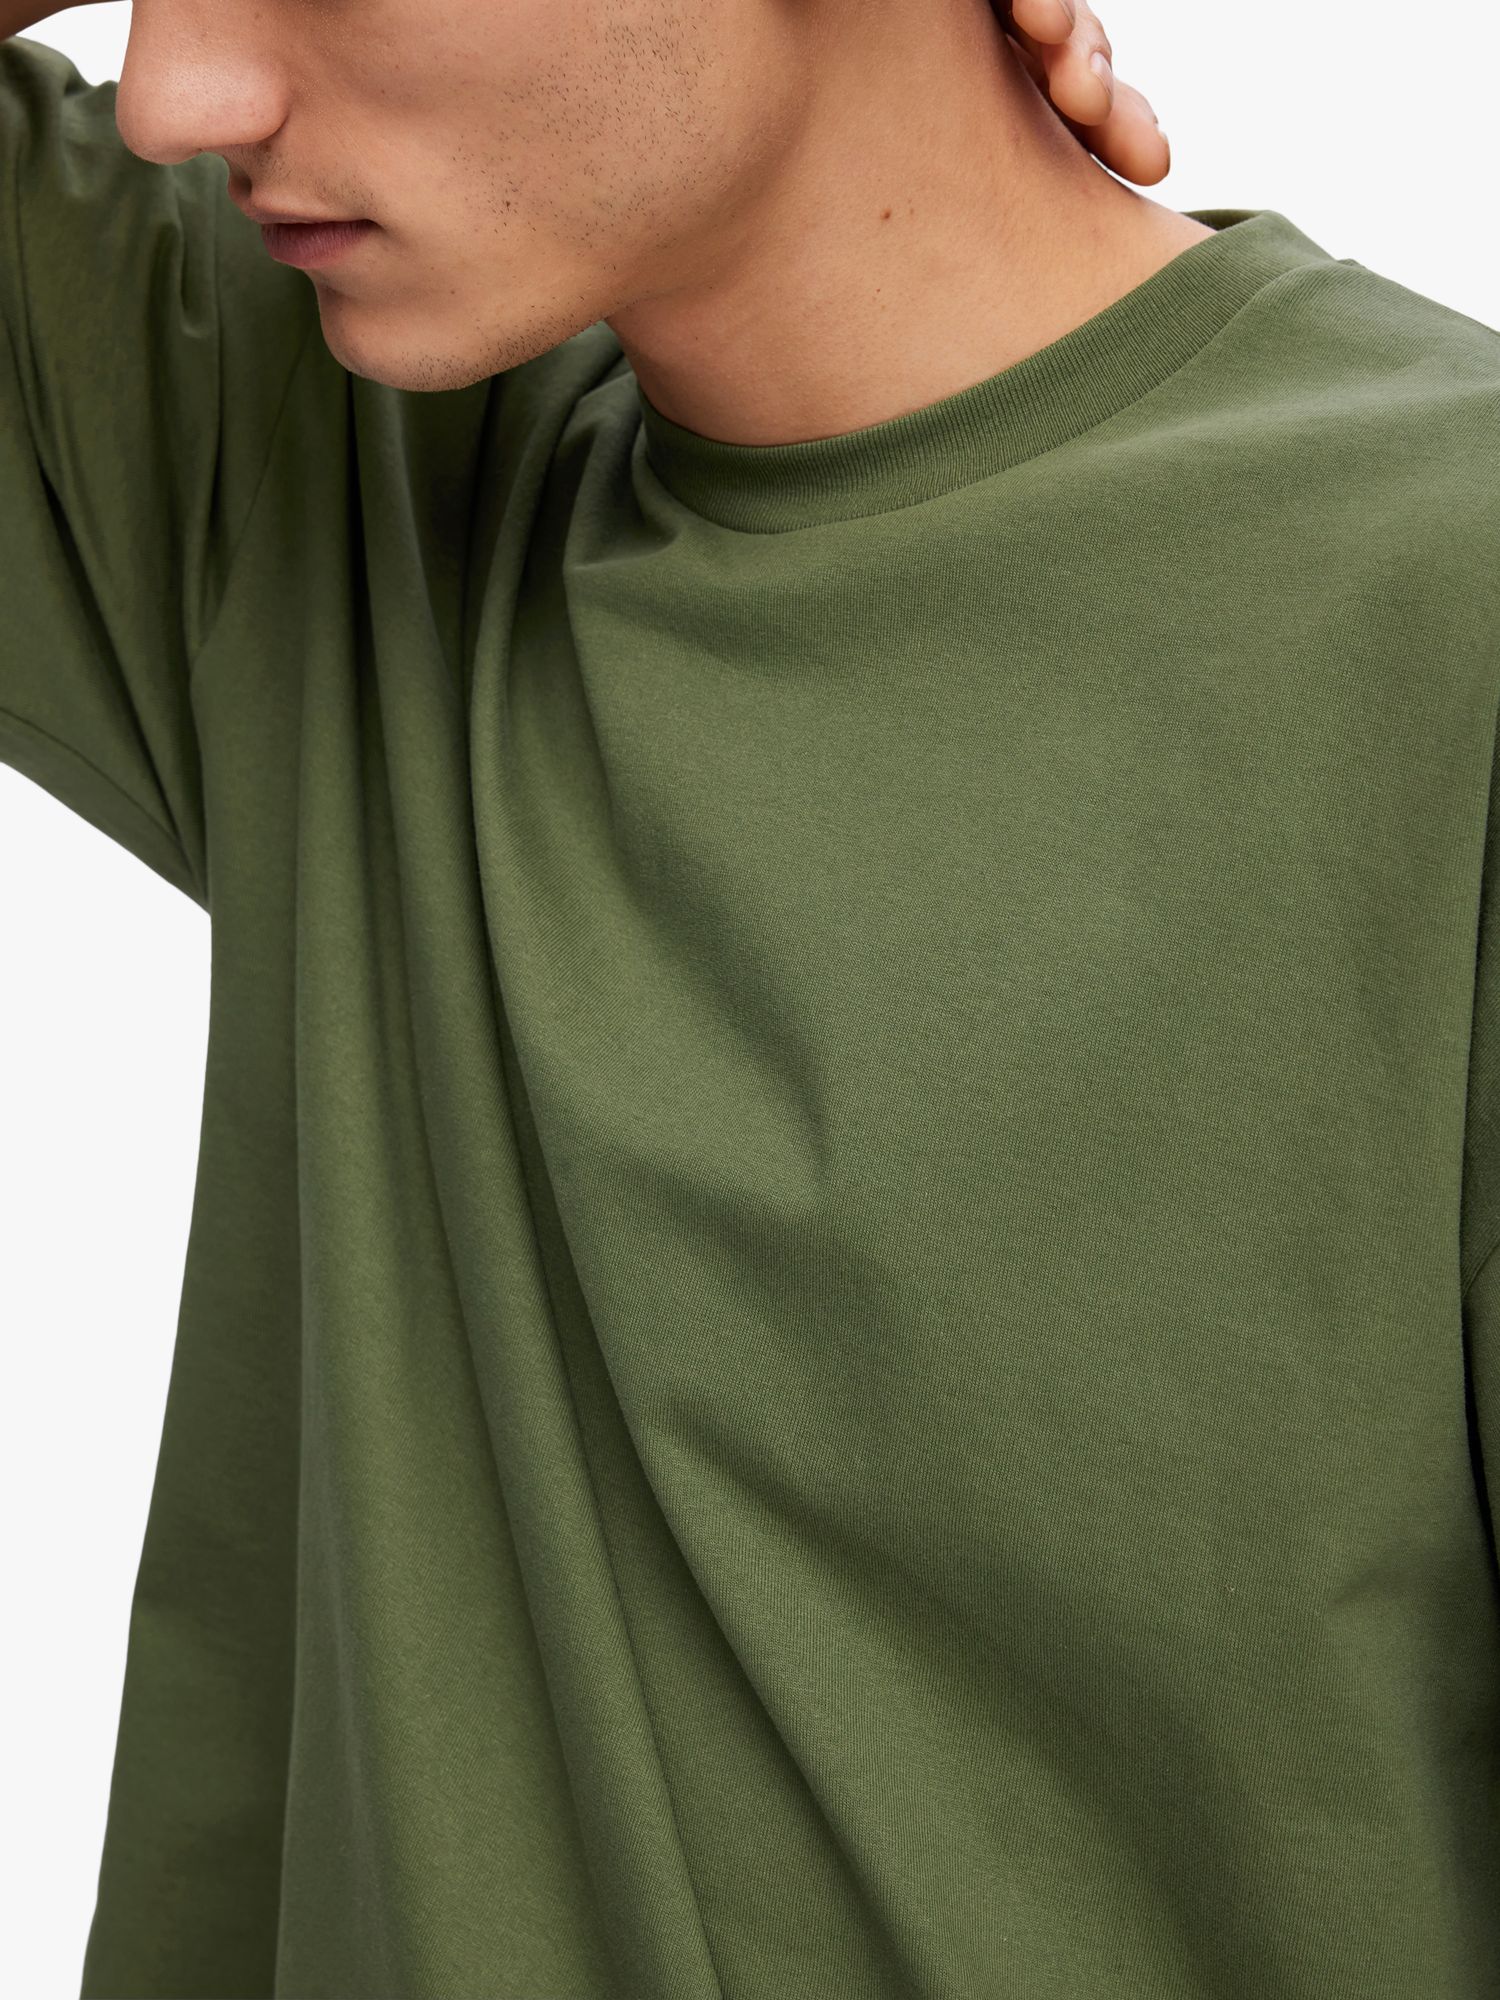 SELECTED HOMME Timeless Short Sleeve T-Shirt, Green, XL